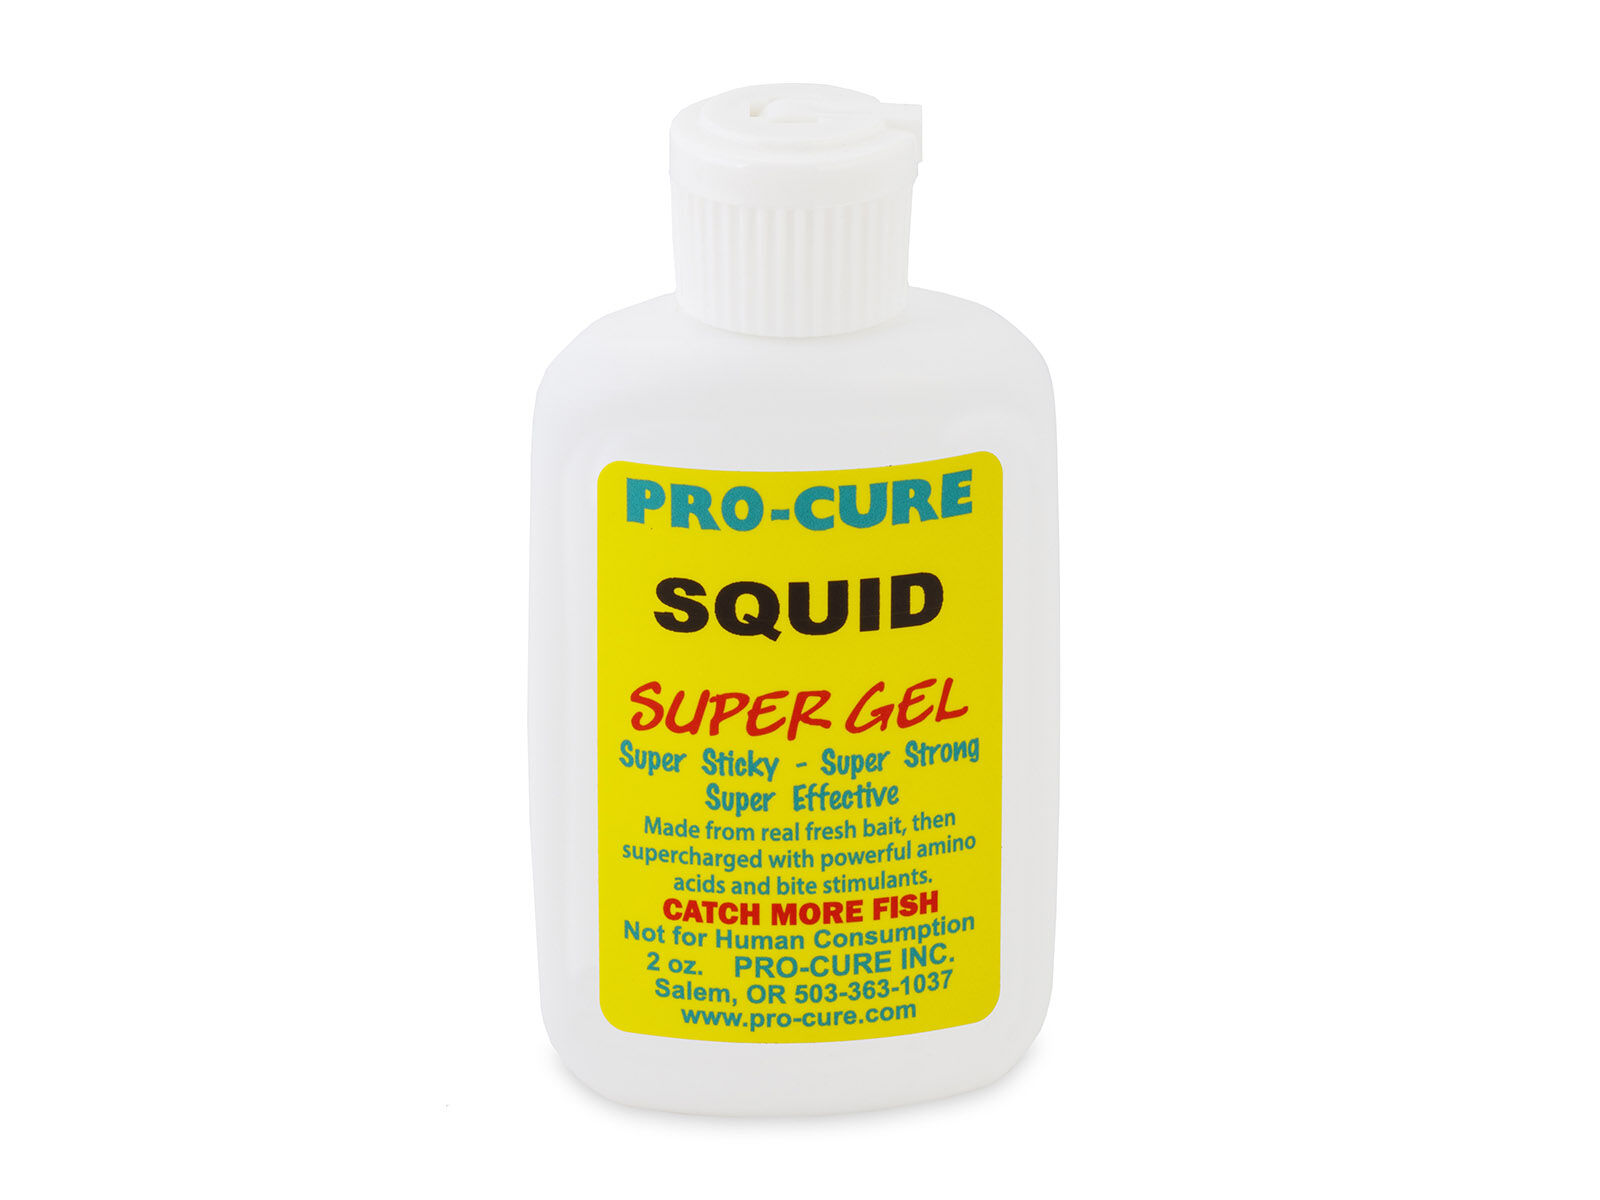 Pro-Cure Super Gel - Squid